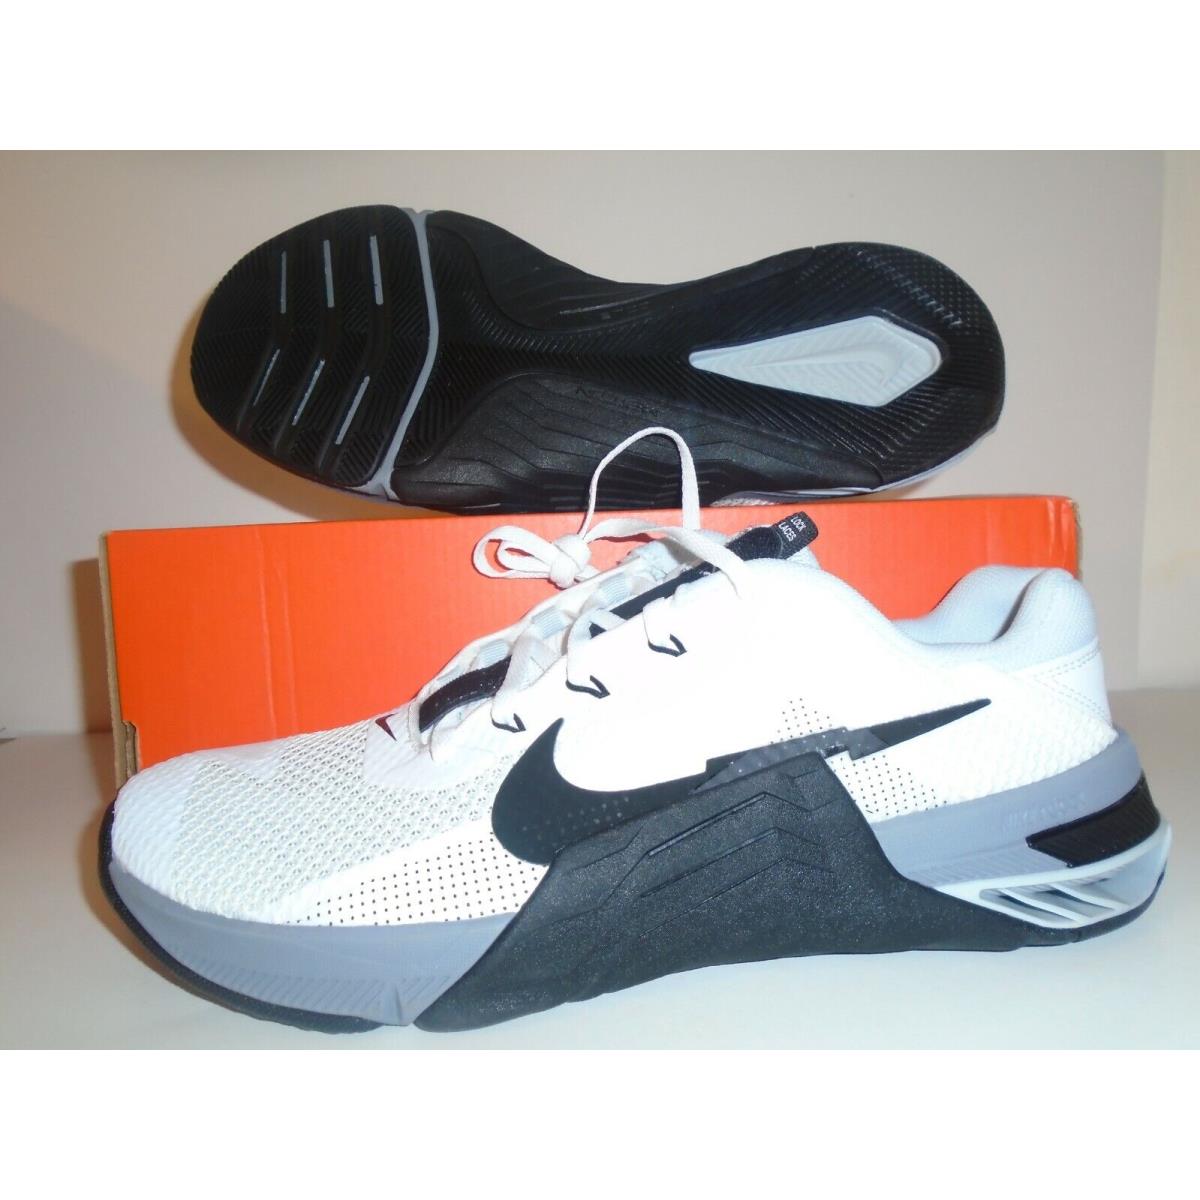 Nike Metcon 7 White Black Gray Training Shoes sz 10